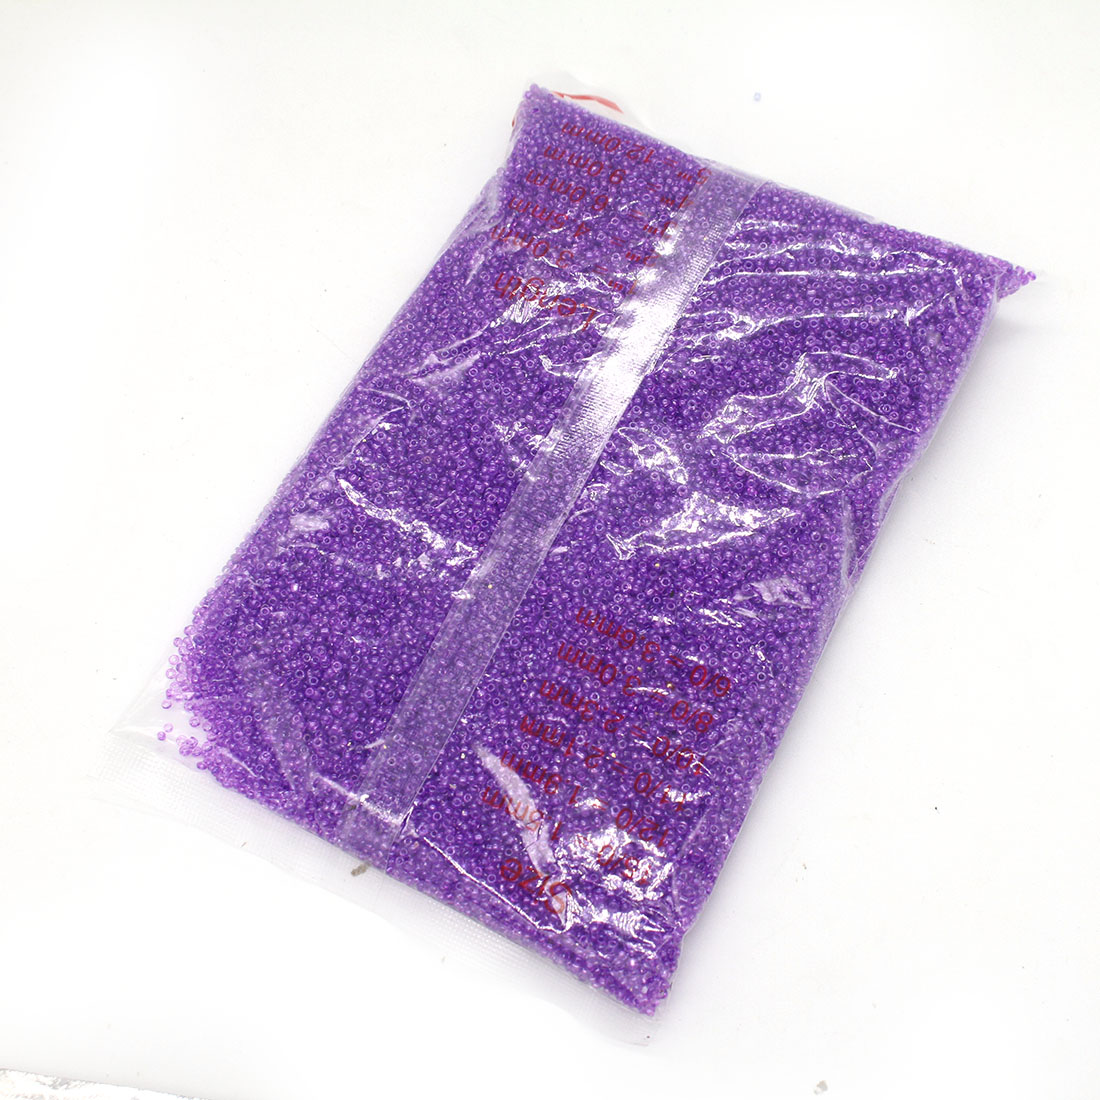 Dark purple 3mm 10,000 packs